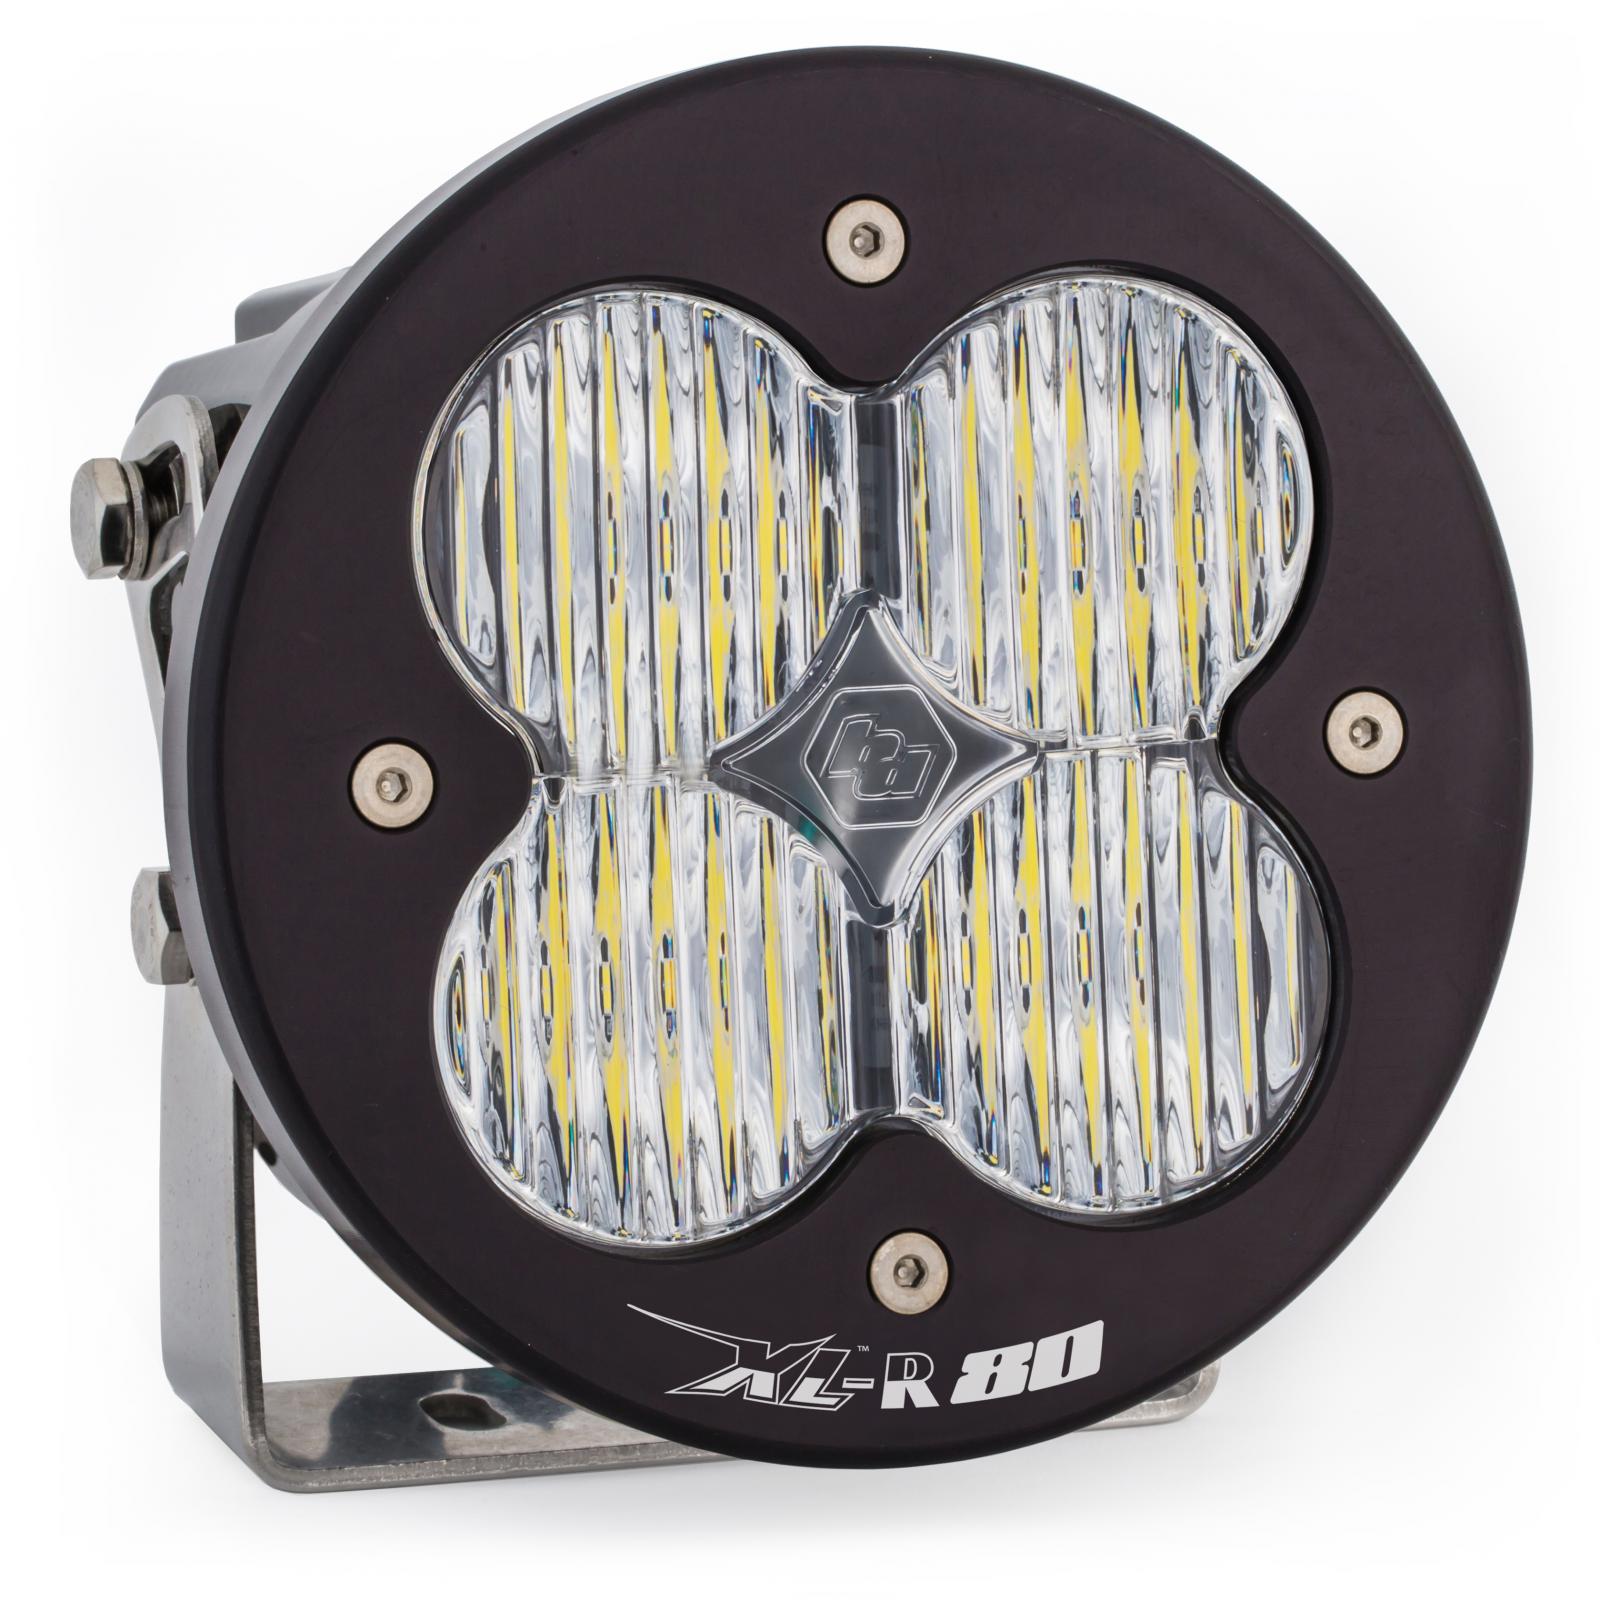 Baja Designs LED Light Pods Clear Lens Spot Each XL R 80 Wide Cornering